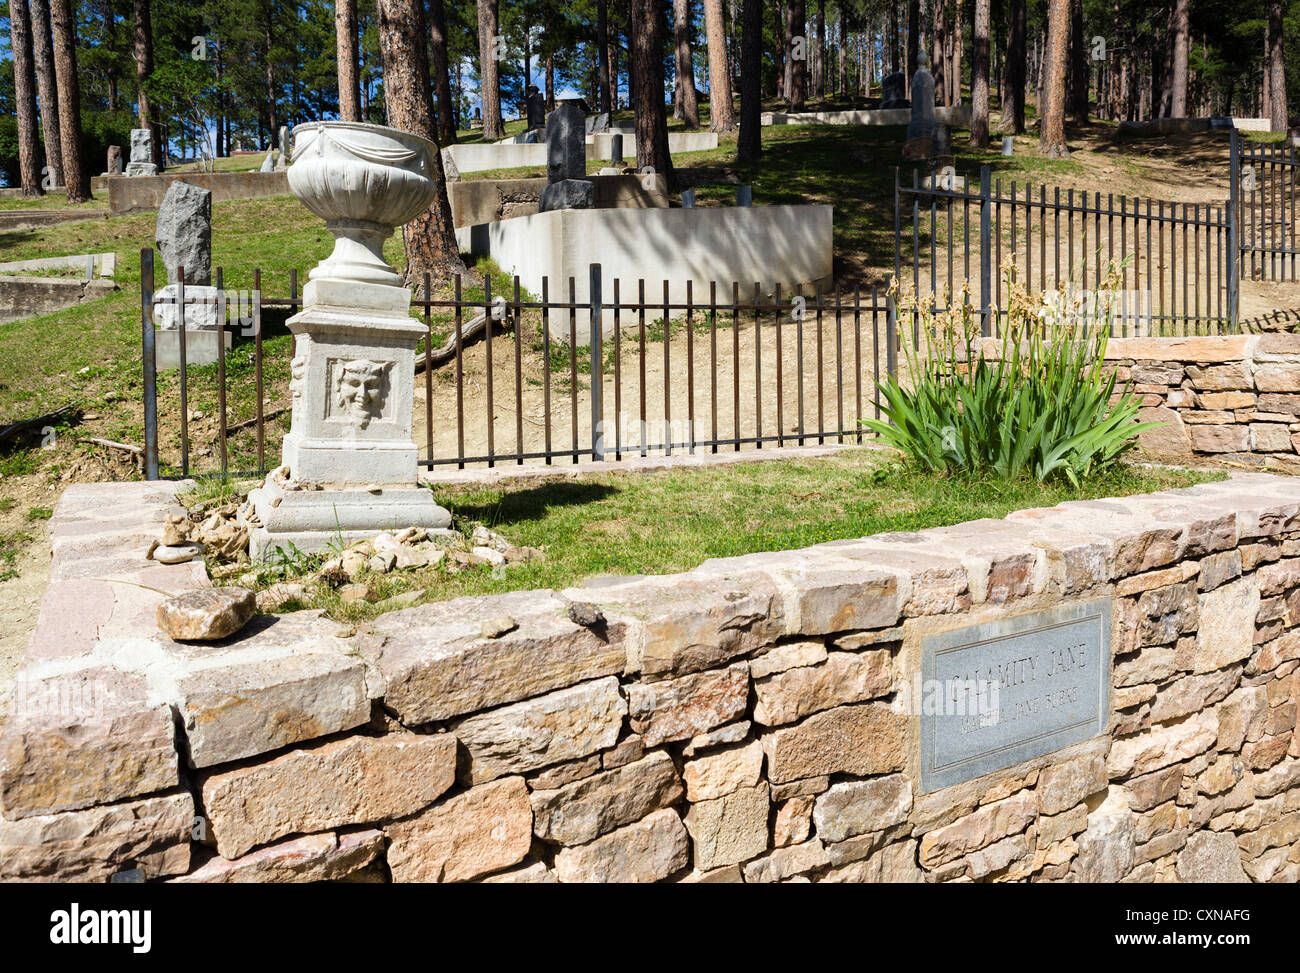 Grab von Calamity Jane auf dem Mount Moriah Cemetery, Deadwood, South Dakota, USA Stockfoto